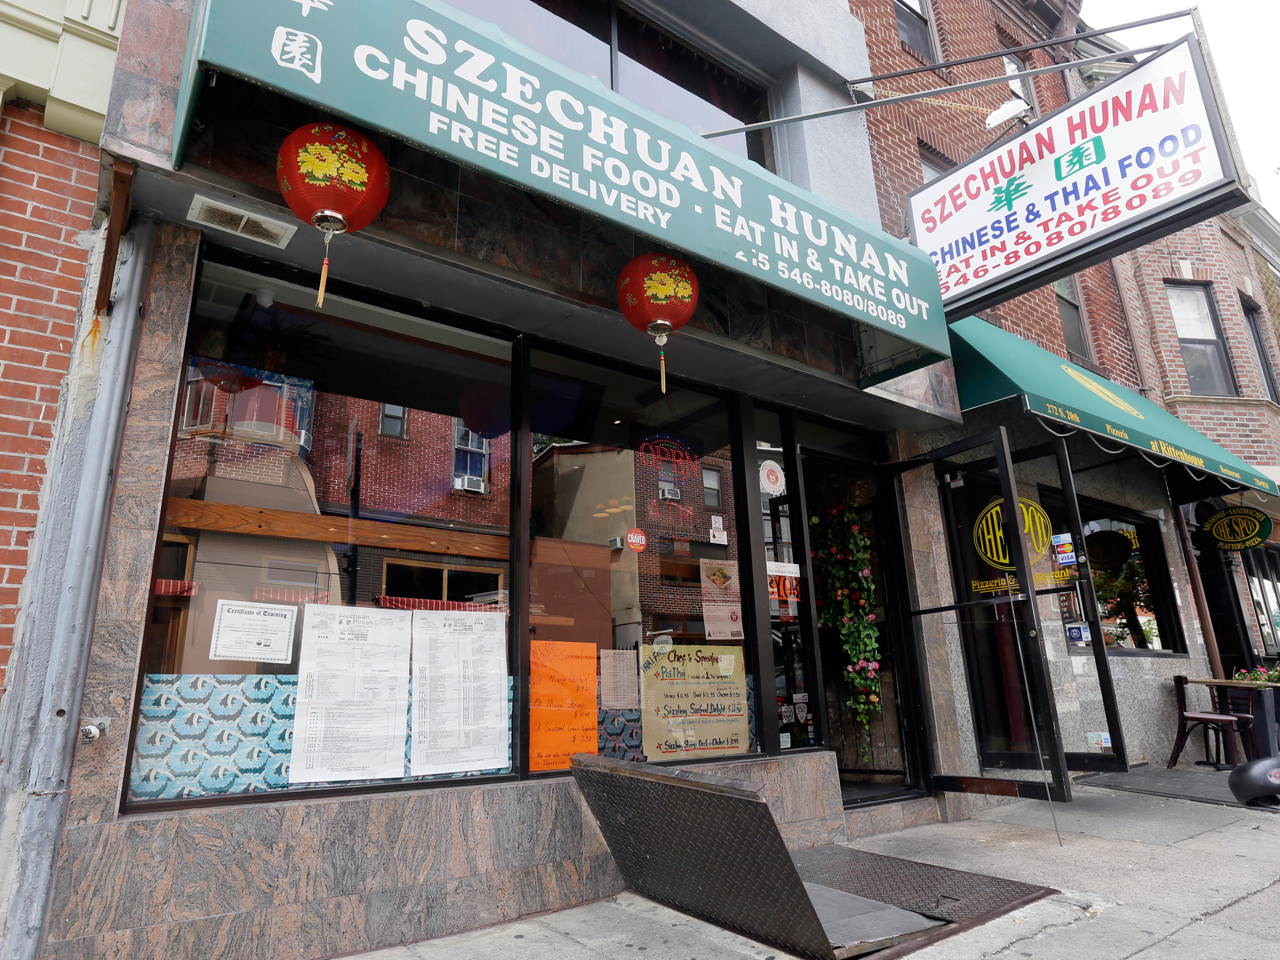 Philadelphia Chinese takeout restaurants cutting salt - CBS News